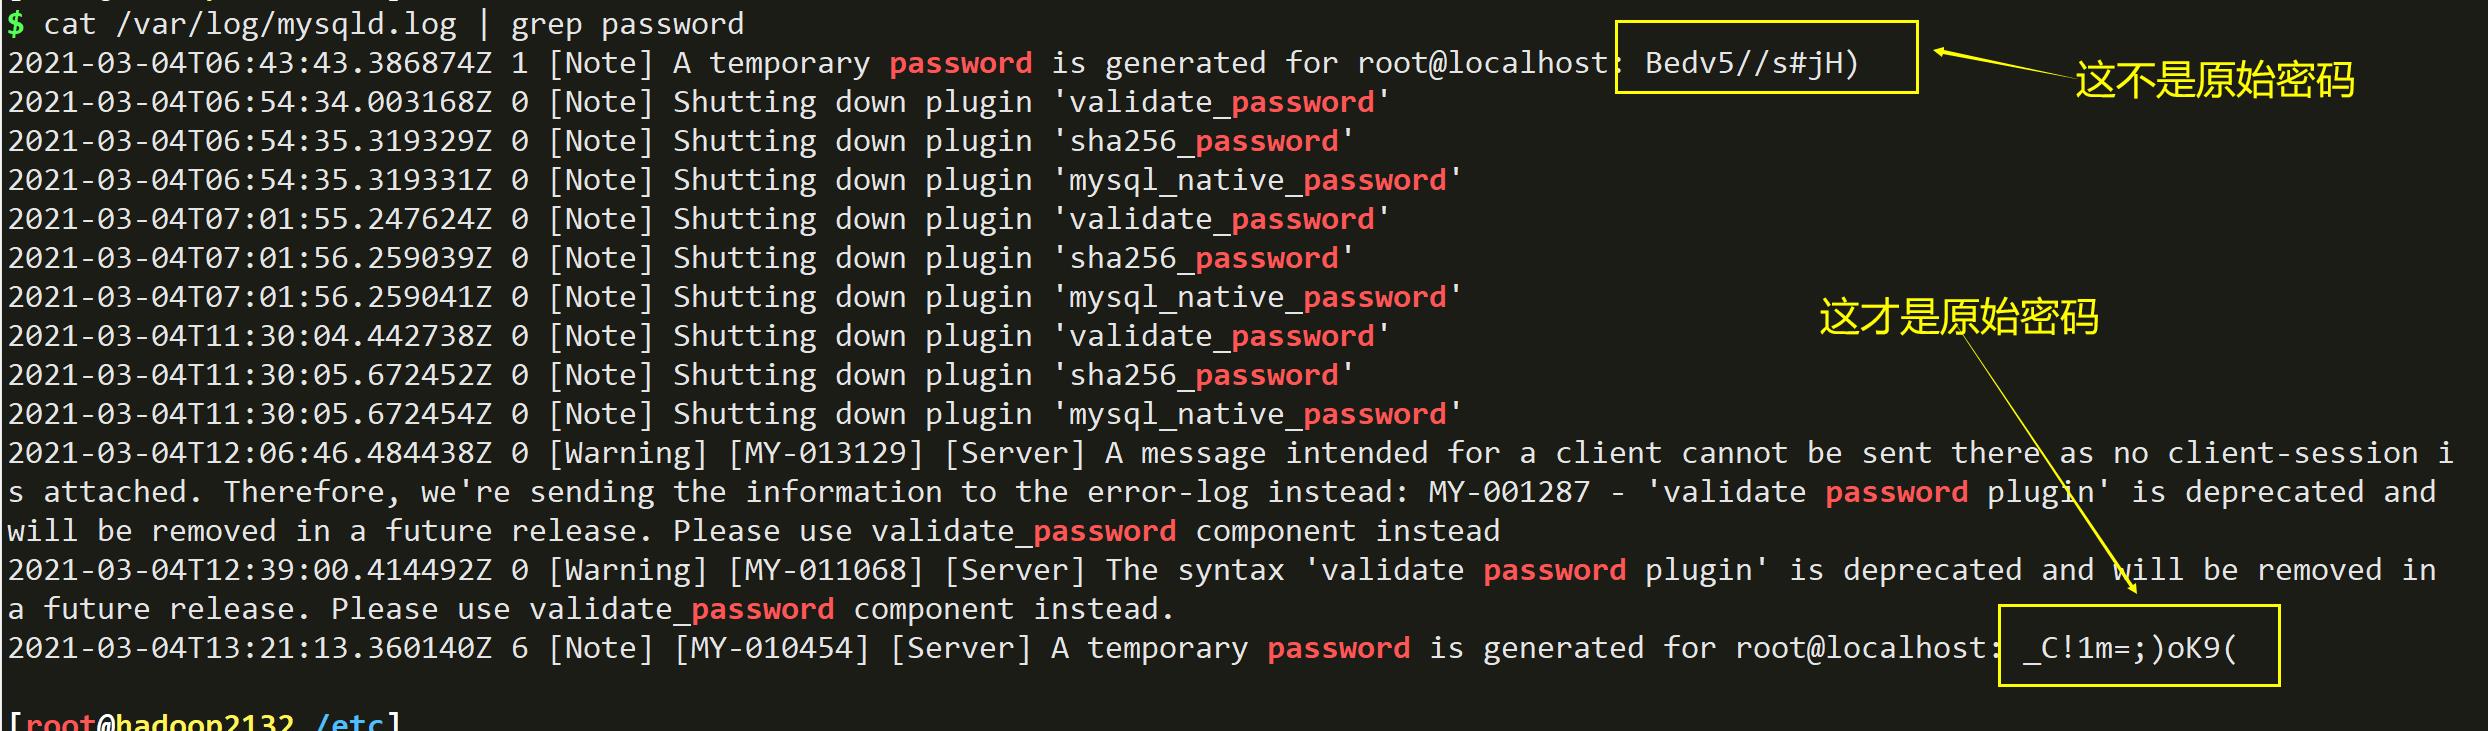 CentOS7安装mysql8原始密码错误问题解决 - 文章图片